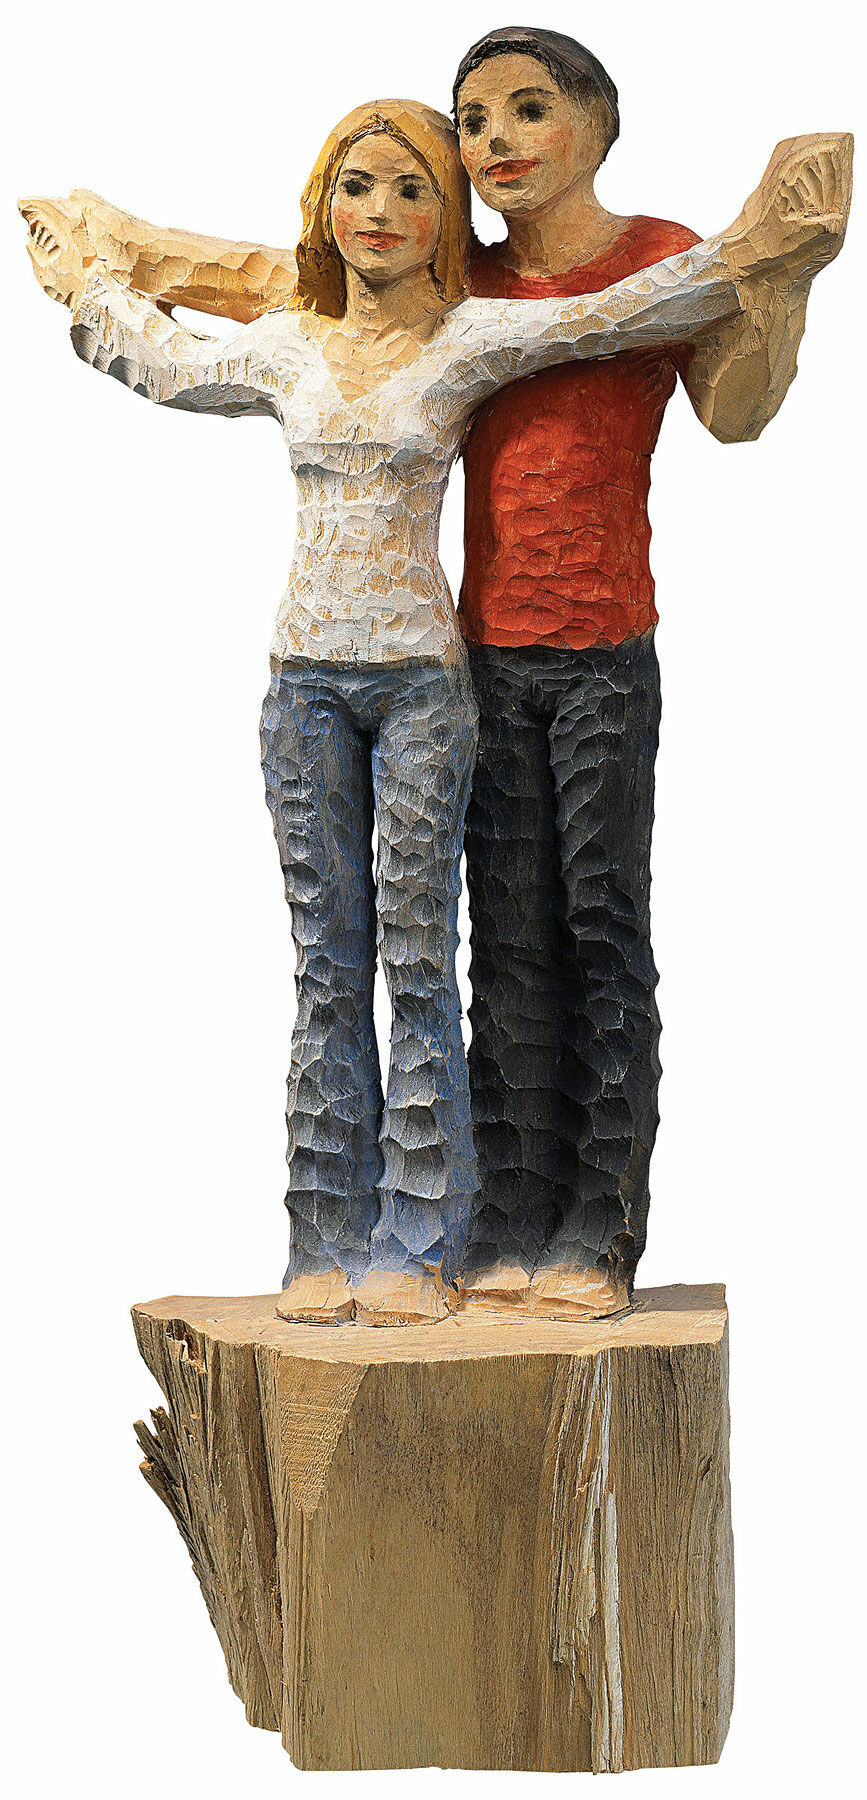 Skulptur "Lovers", støbt træfinish von Michael Pickl